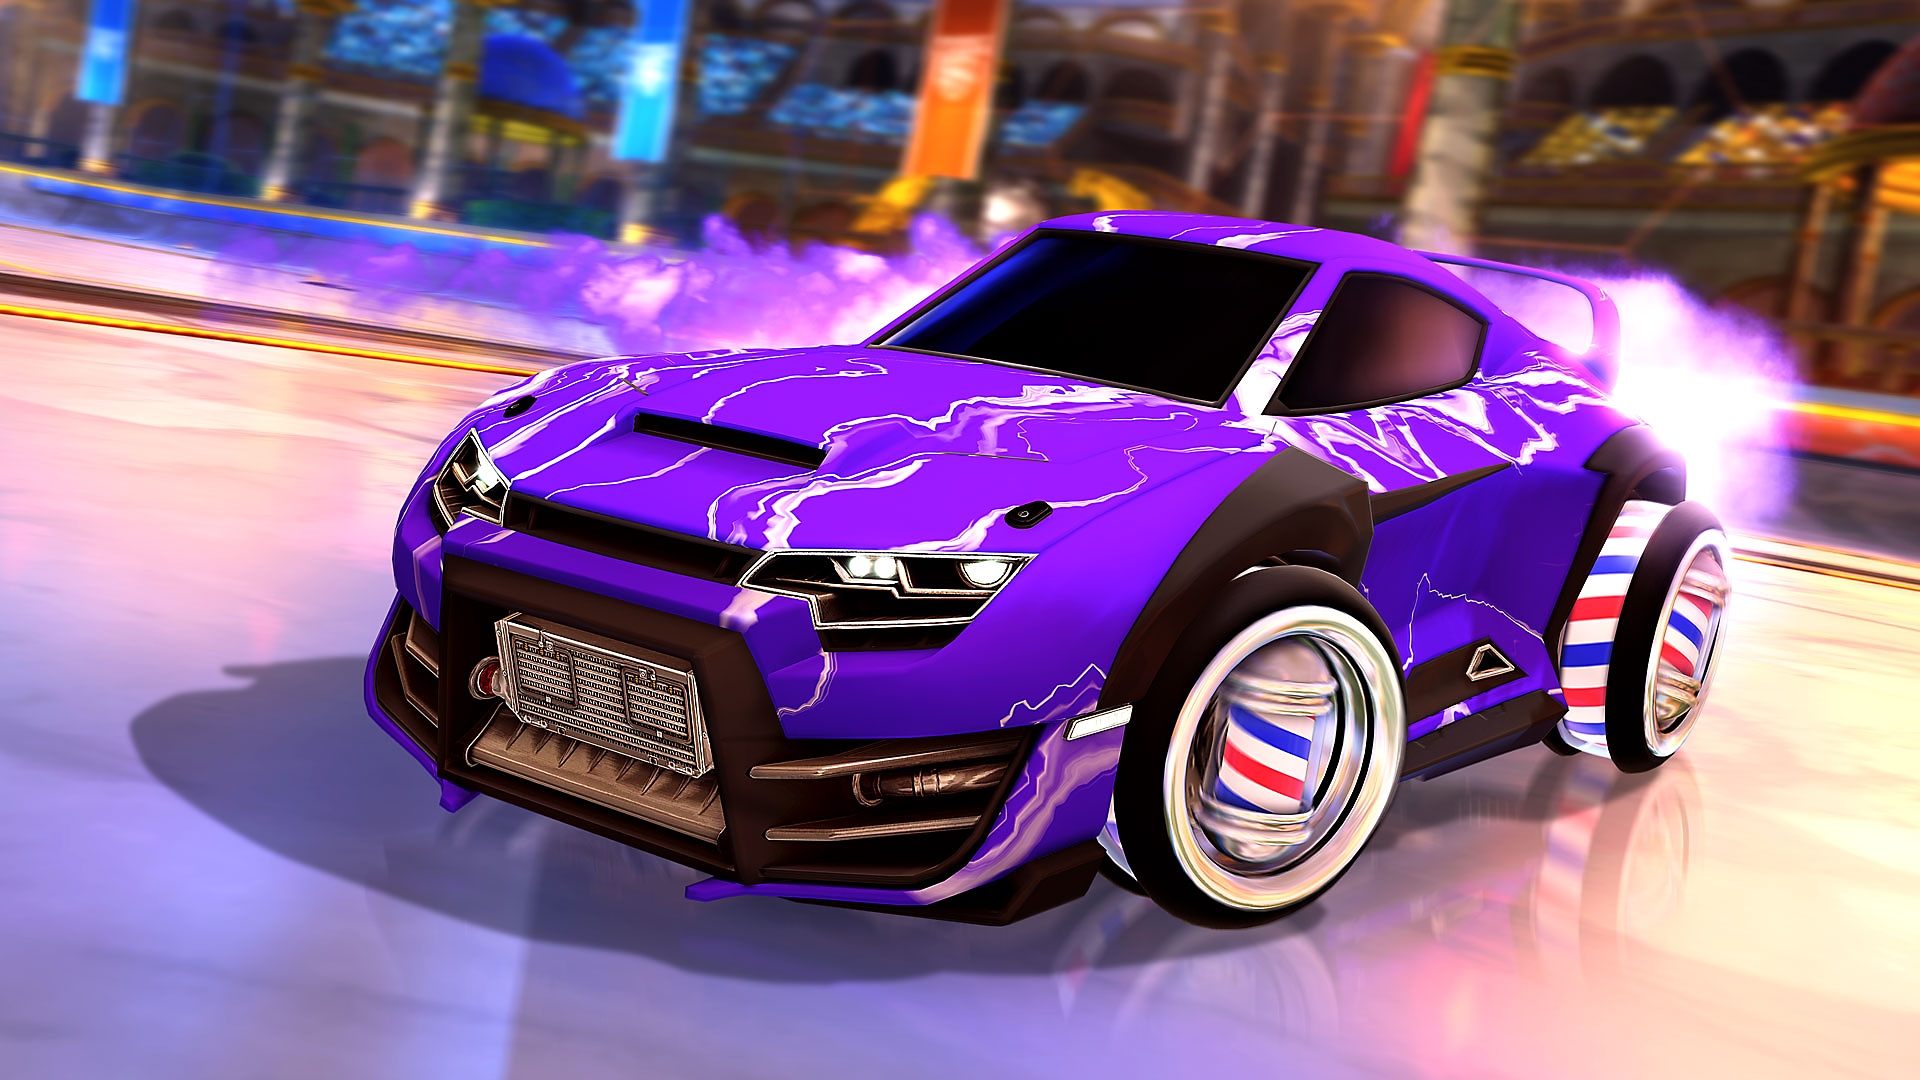 《Rocket League》螢幕截圖，顯示紫色車輛